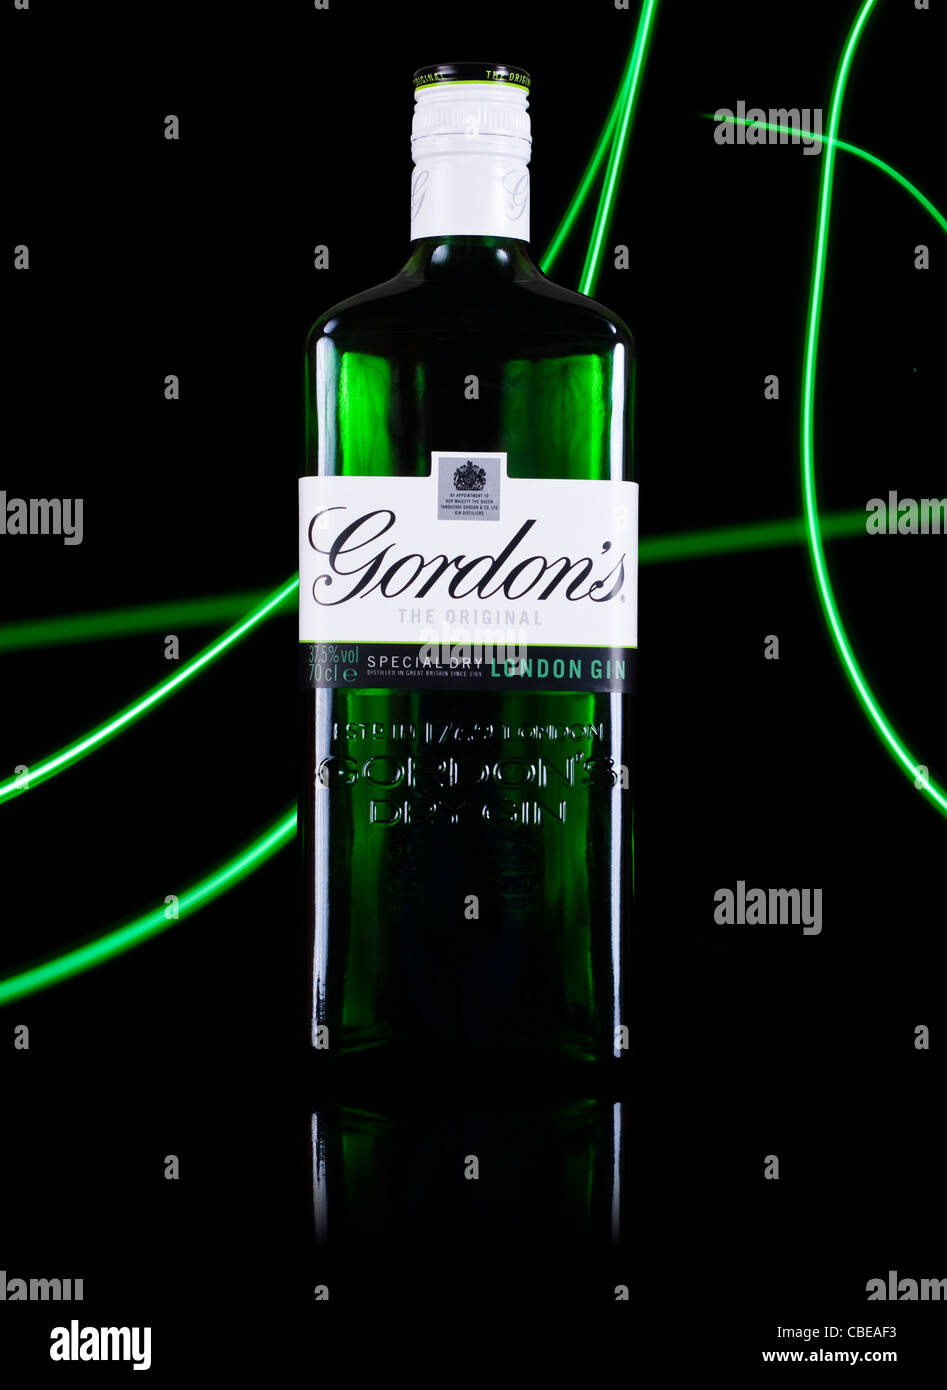 Gordon's Gin Pack shot Stock Photo